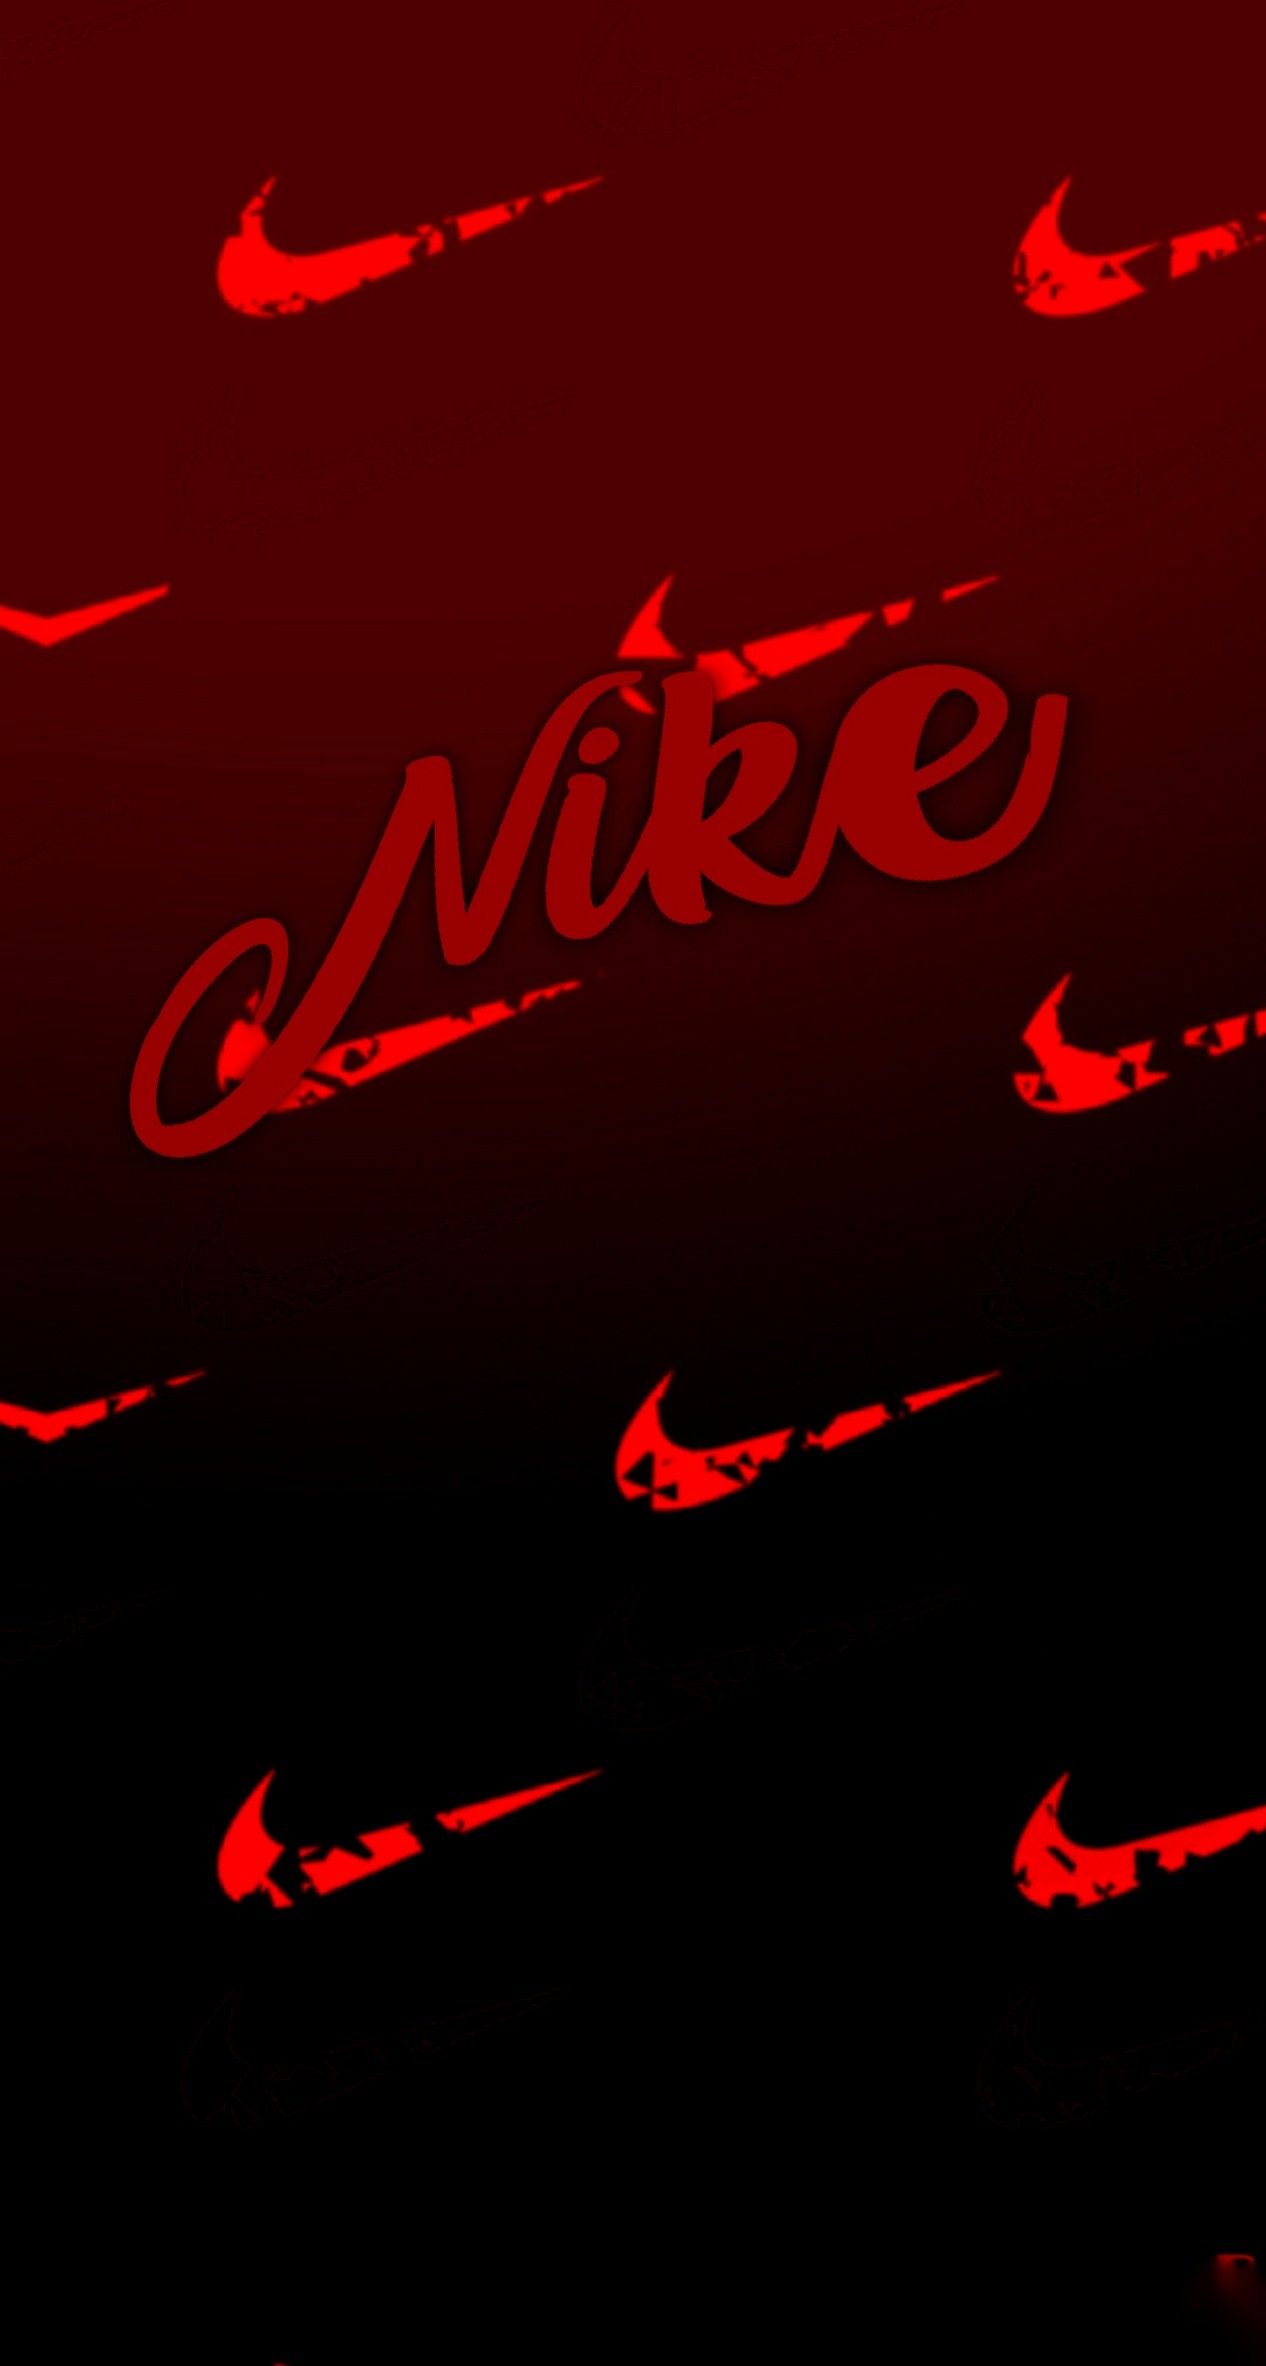 Nike wallpaper. Nike wallpaper, Nike logo wallpaper, iPhone wallpaper vintage